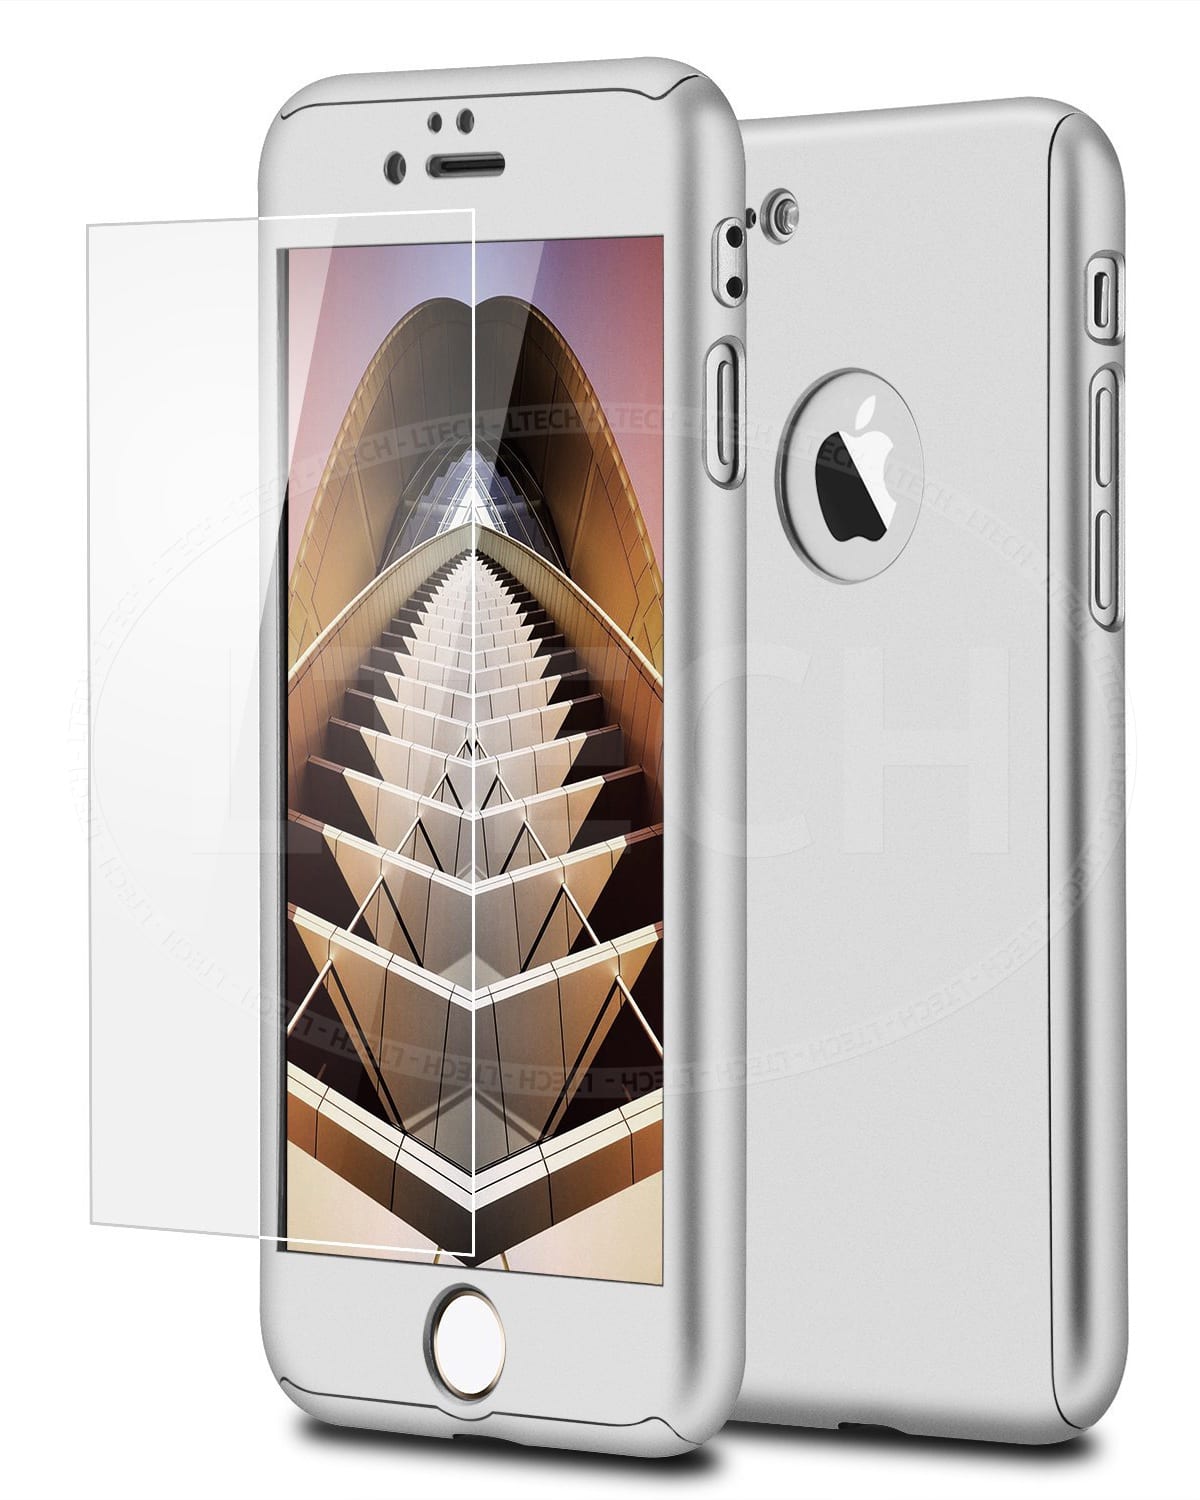 display Shaded experimental Husa Plastic 360° Fullcover iPhone SE 2 2020 Silver+ Folie Sticla -  tintom.ro